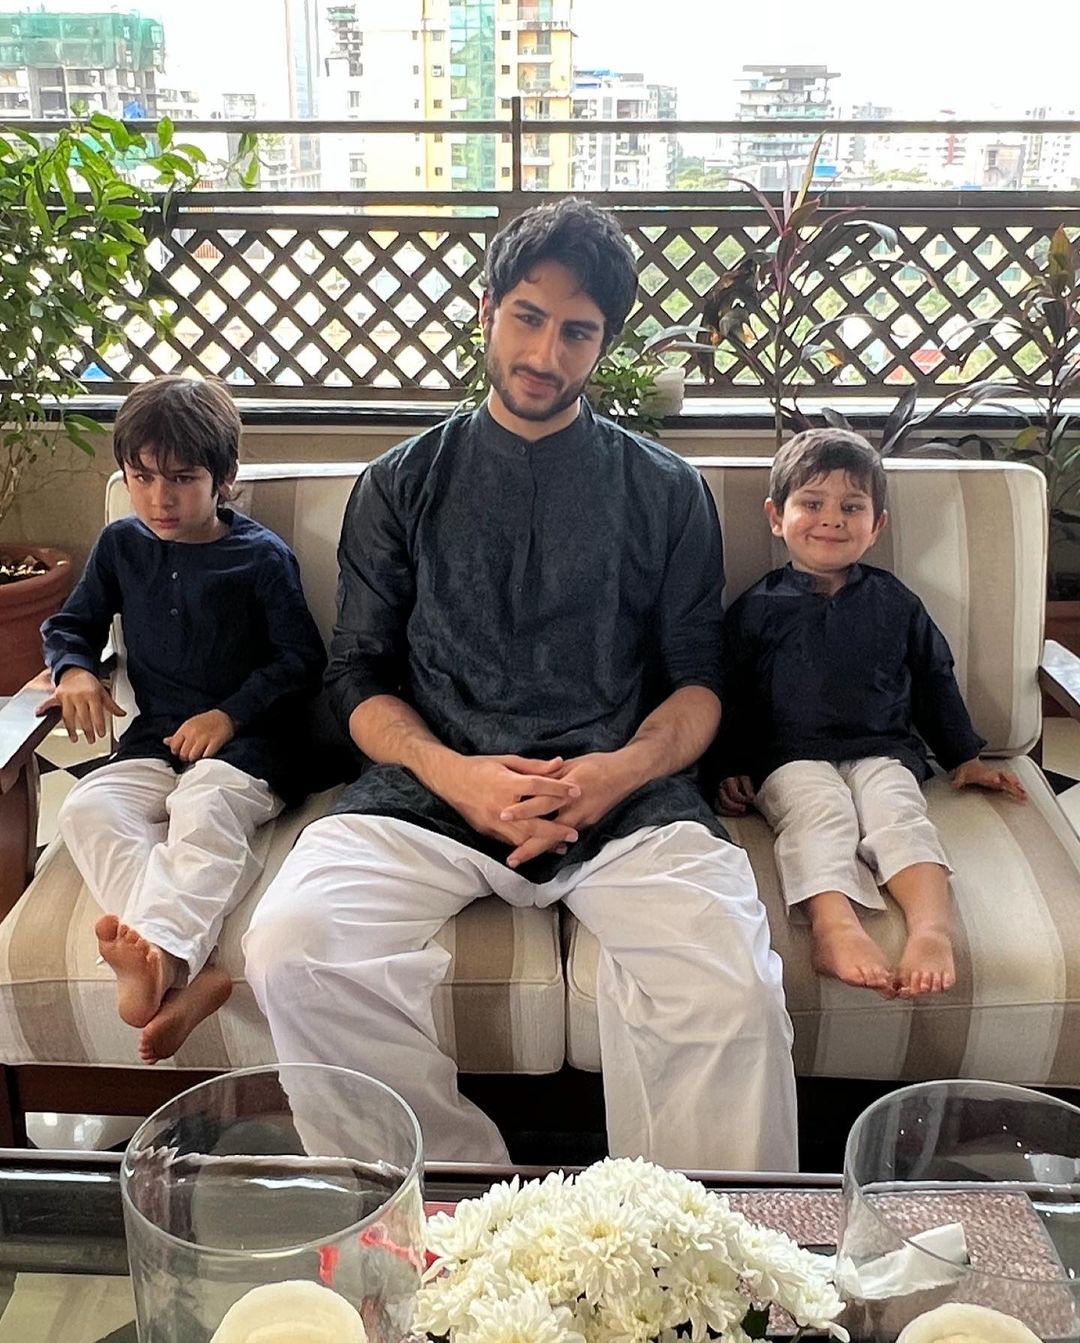 Ibrahim, Taimur and Jeh - The handsome Khan boys